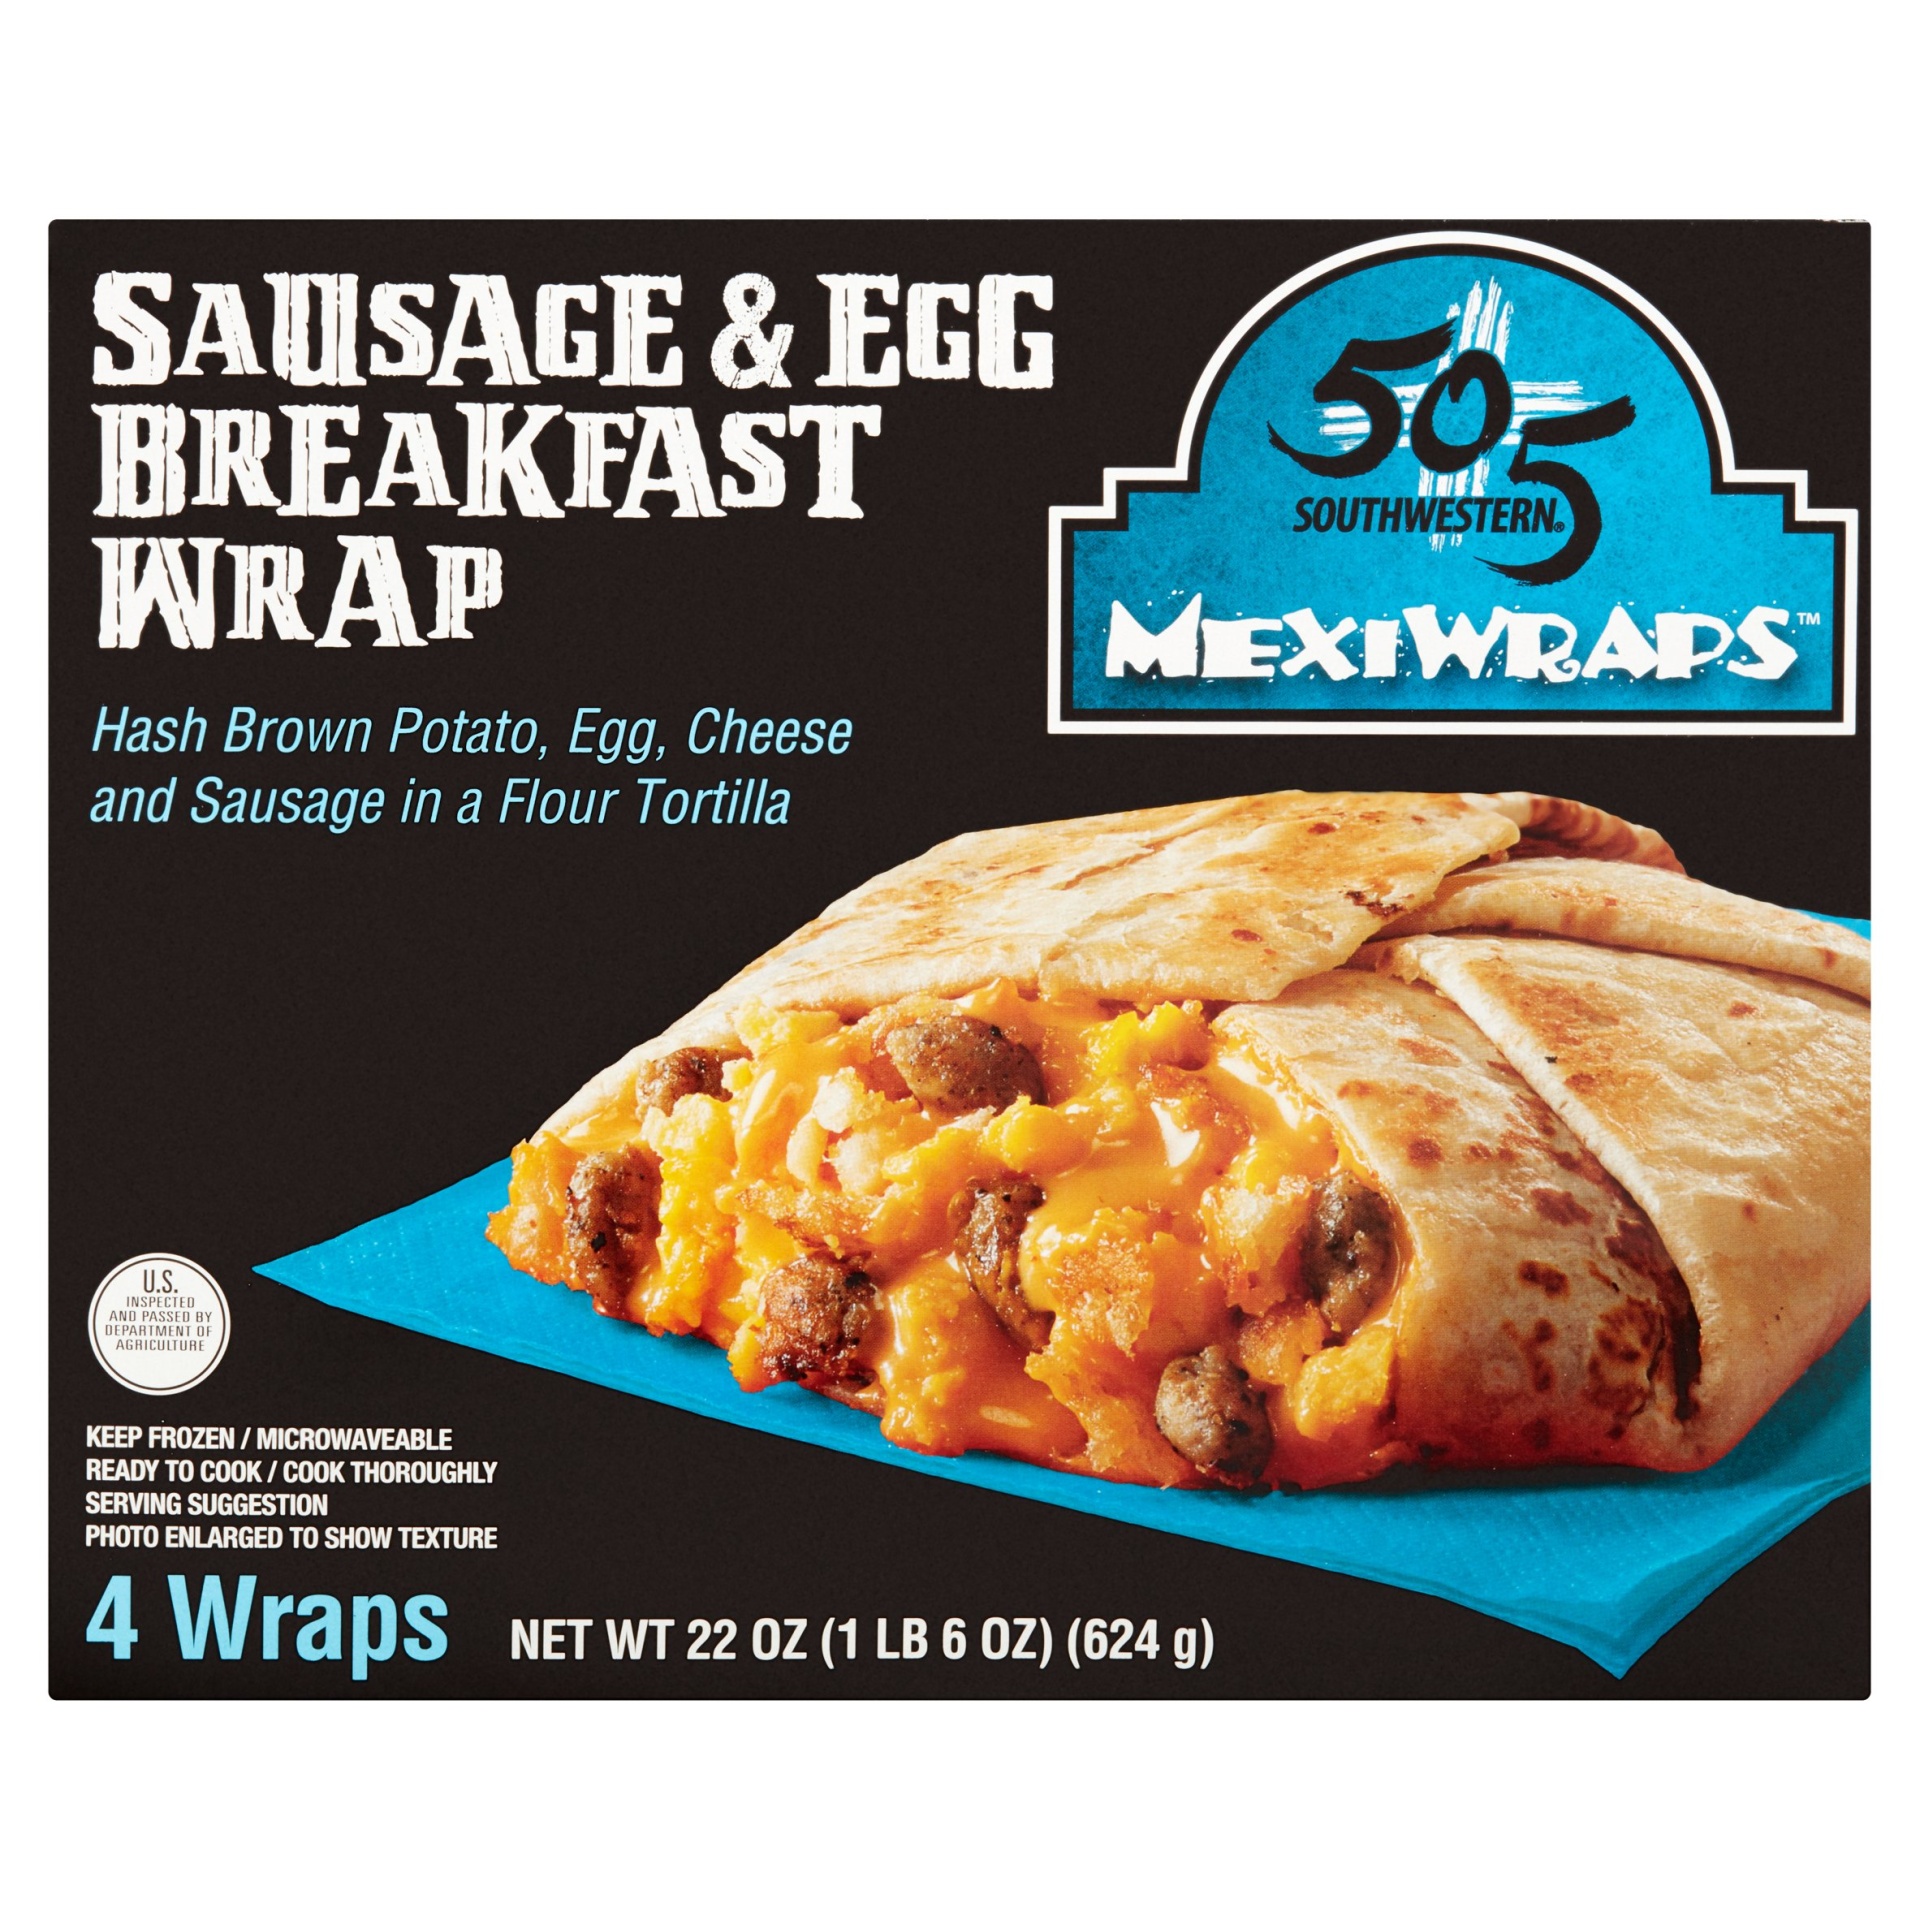 slide 1 of 1, 505 Southwestern Mexiwraps Sausage & Egg Breakfast Wrap, 4 ct